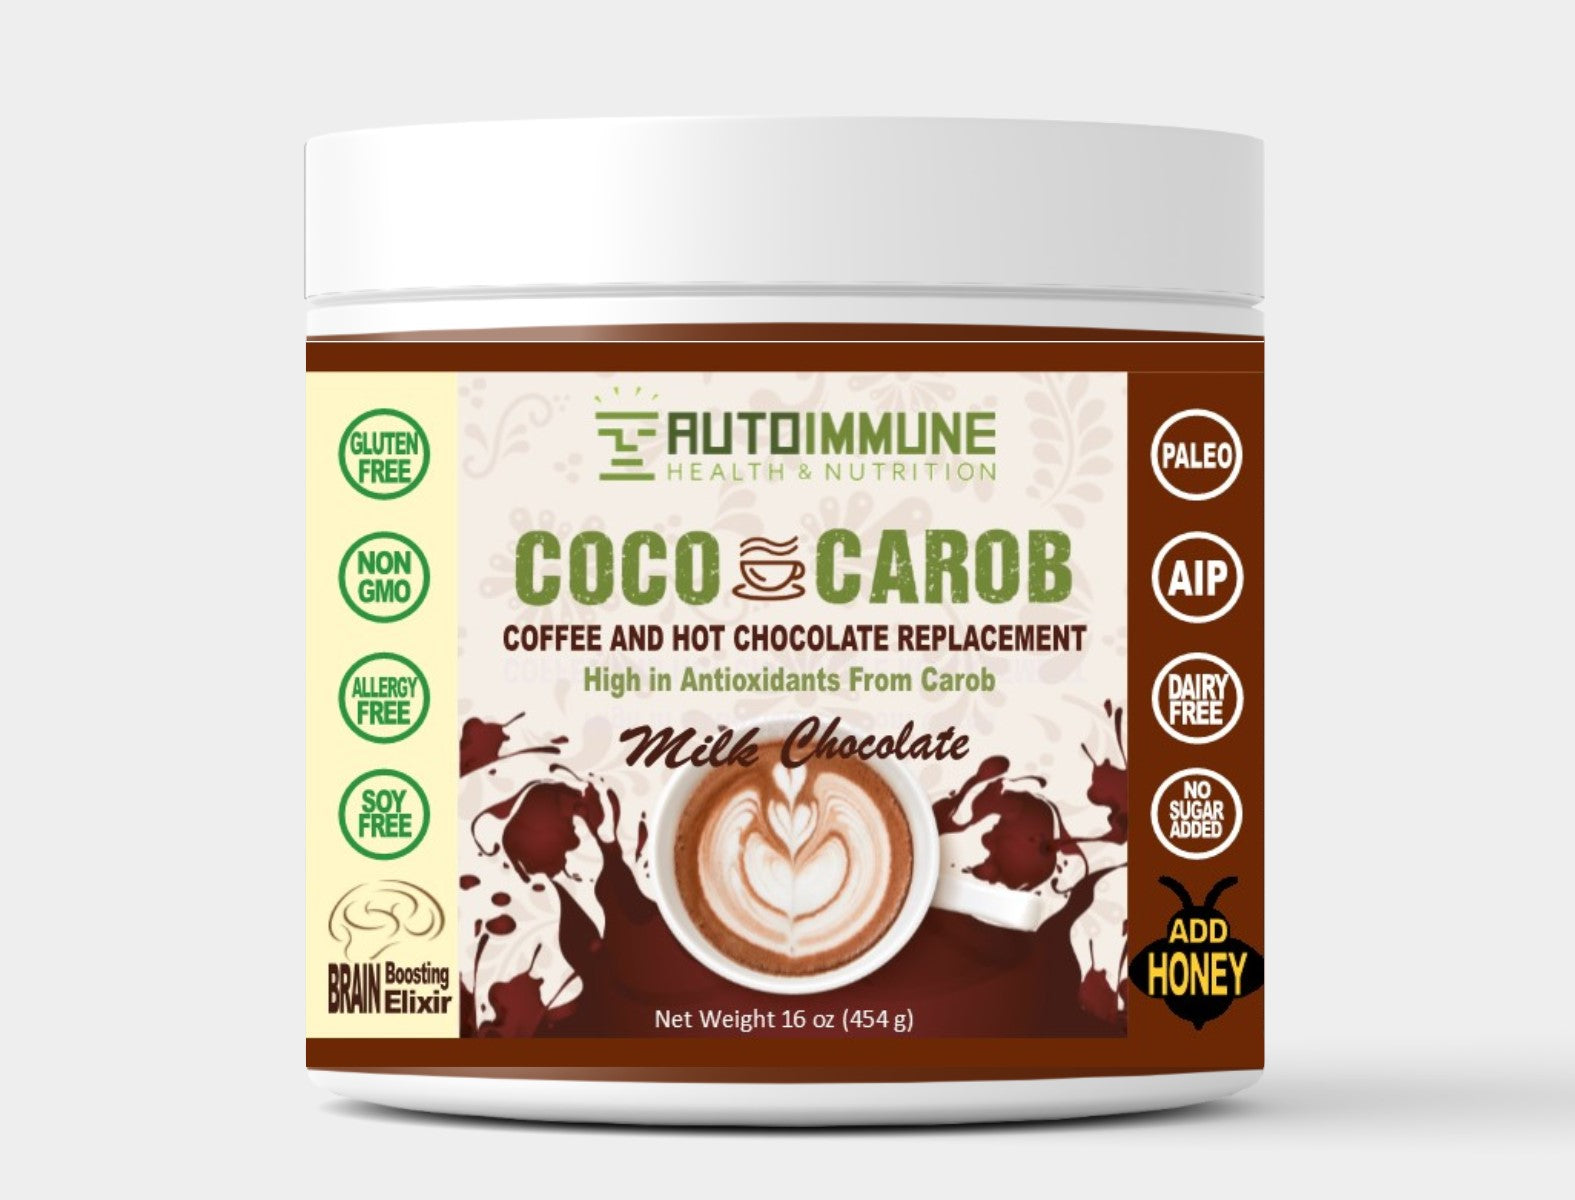 Milk Chocolate Coco-Carob, Coffee & Hot Chocolate Replacement (ADD HONEY)